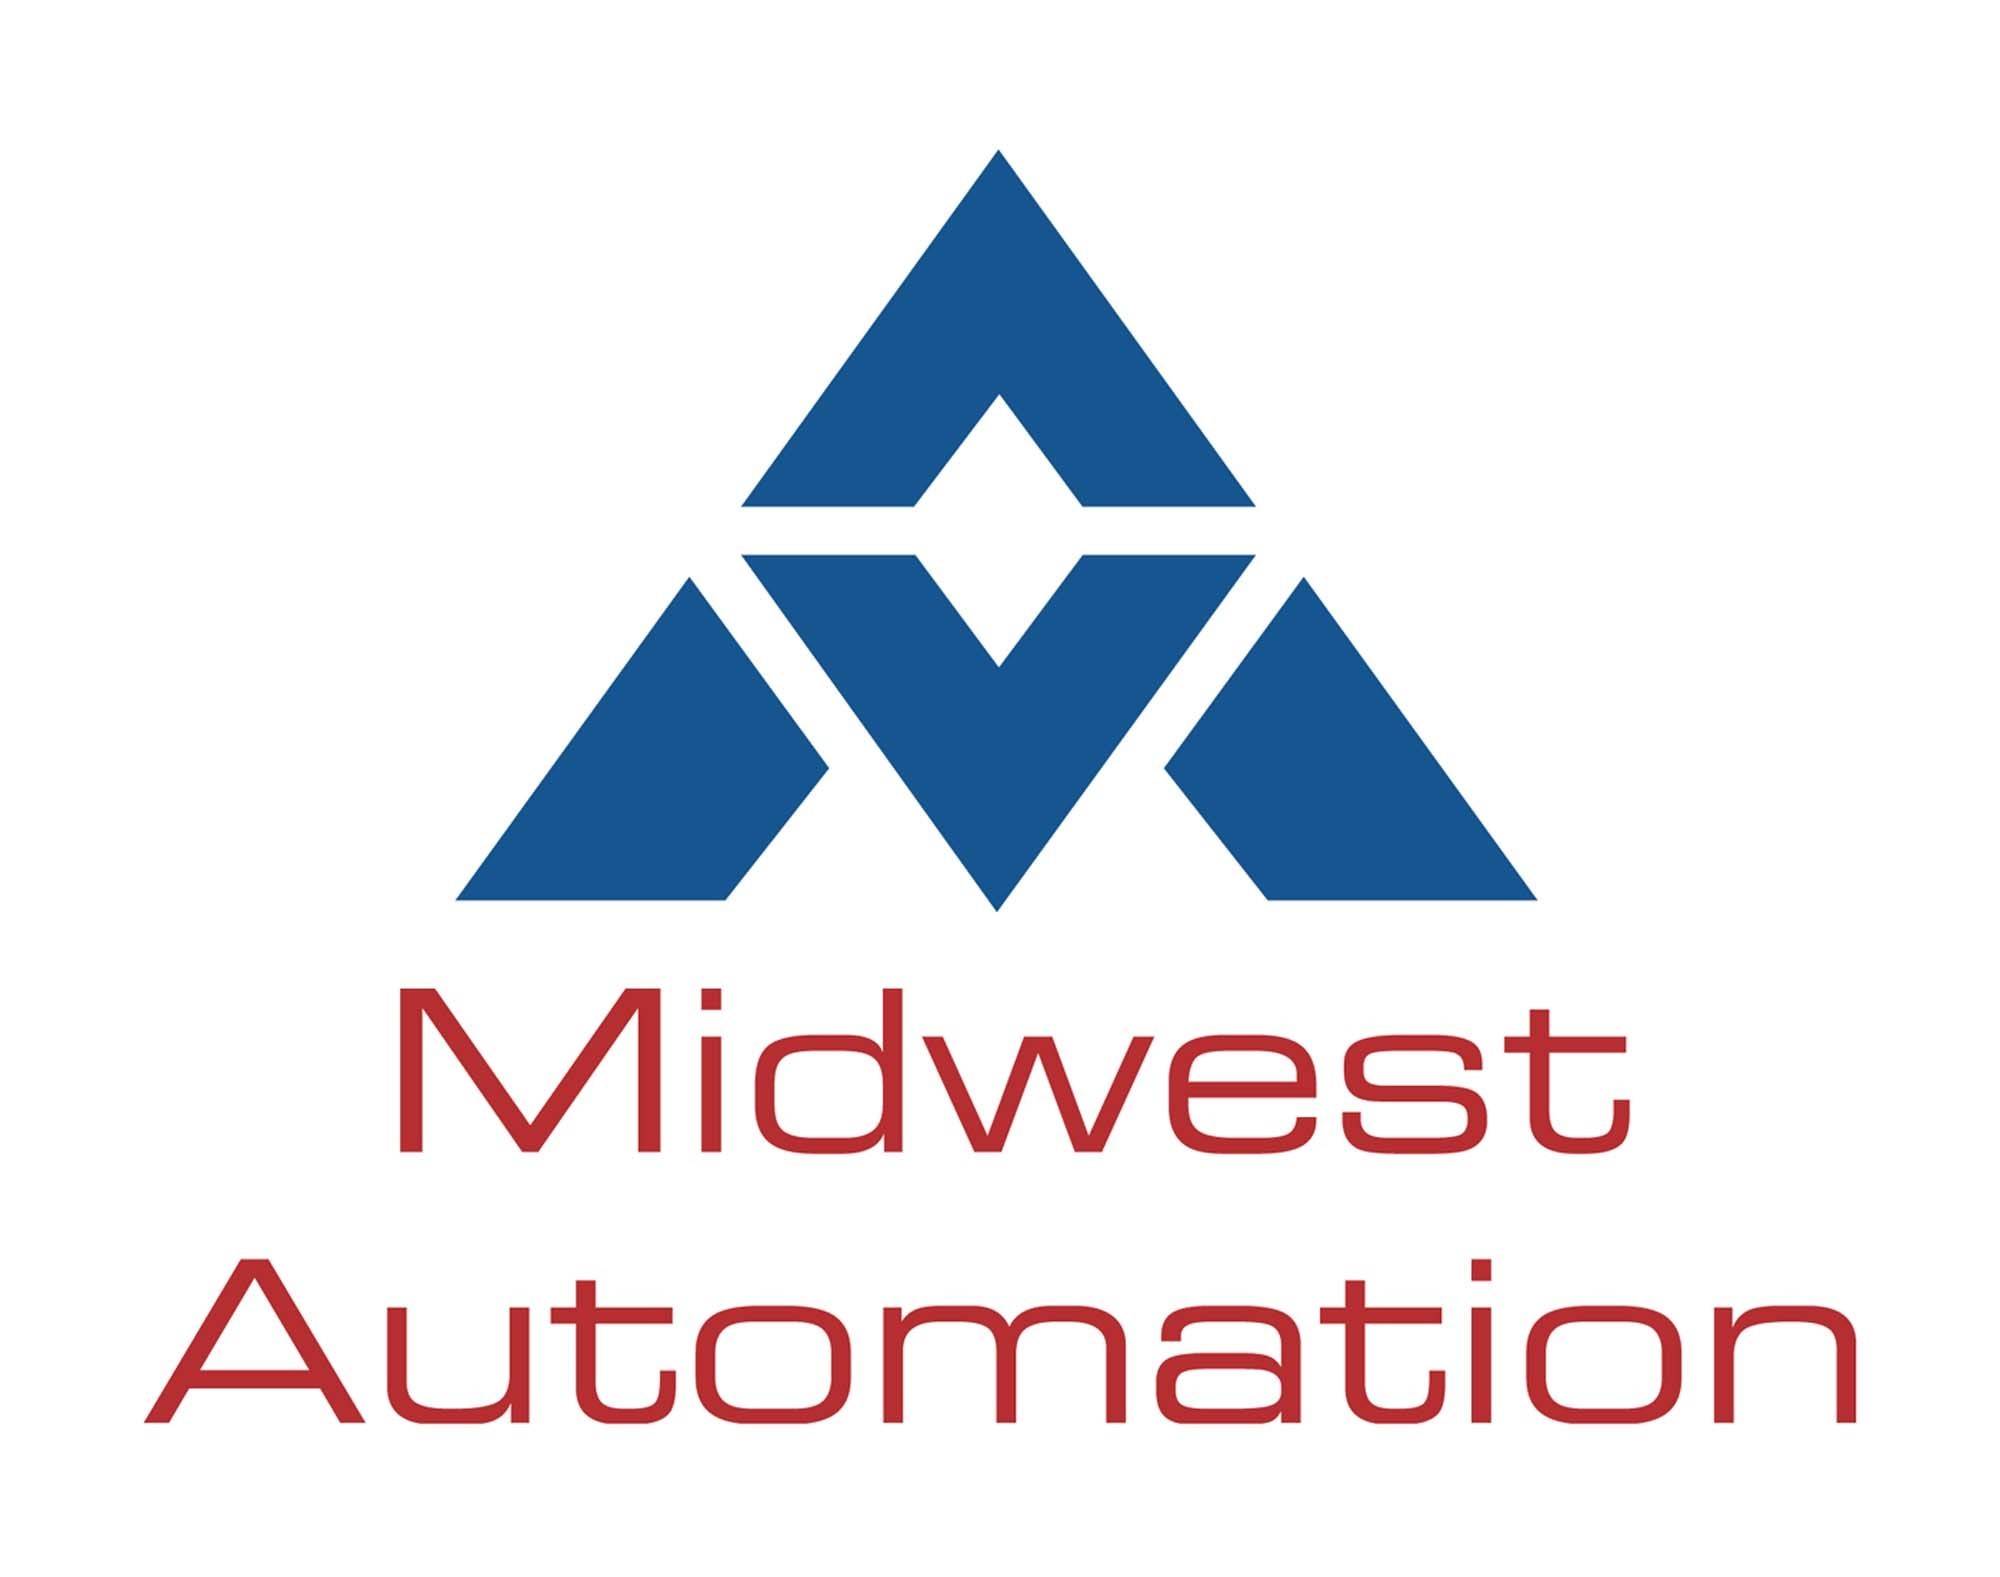 MidwestAutomation logo